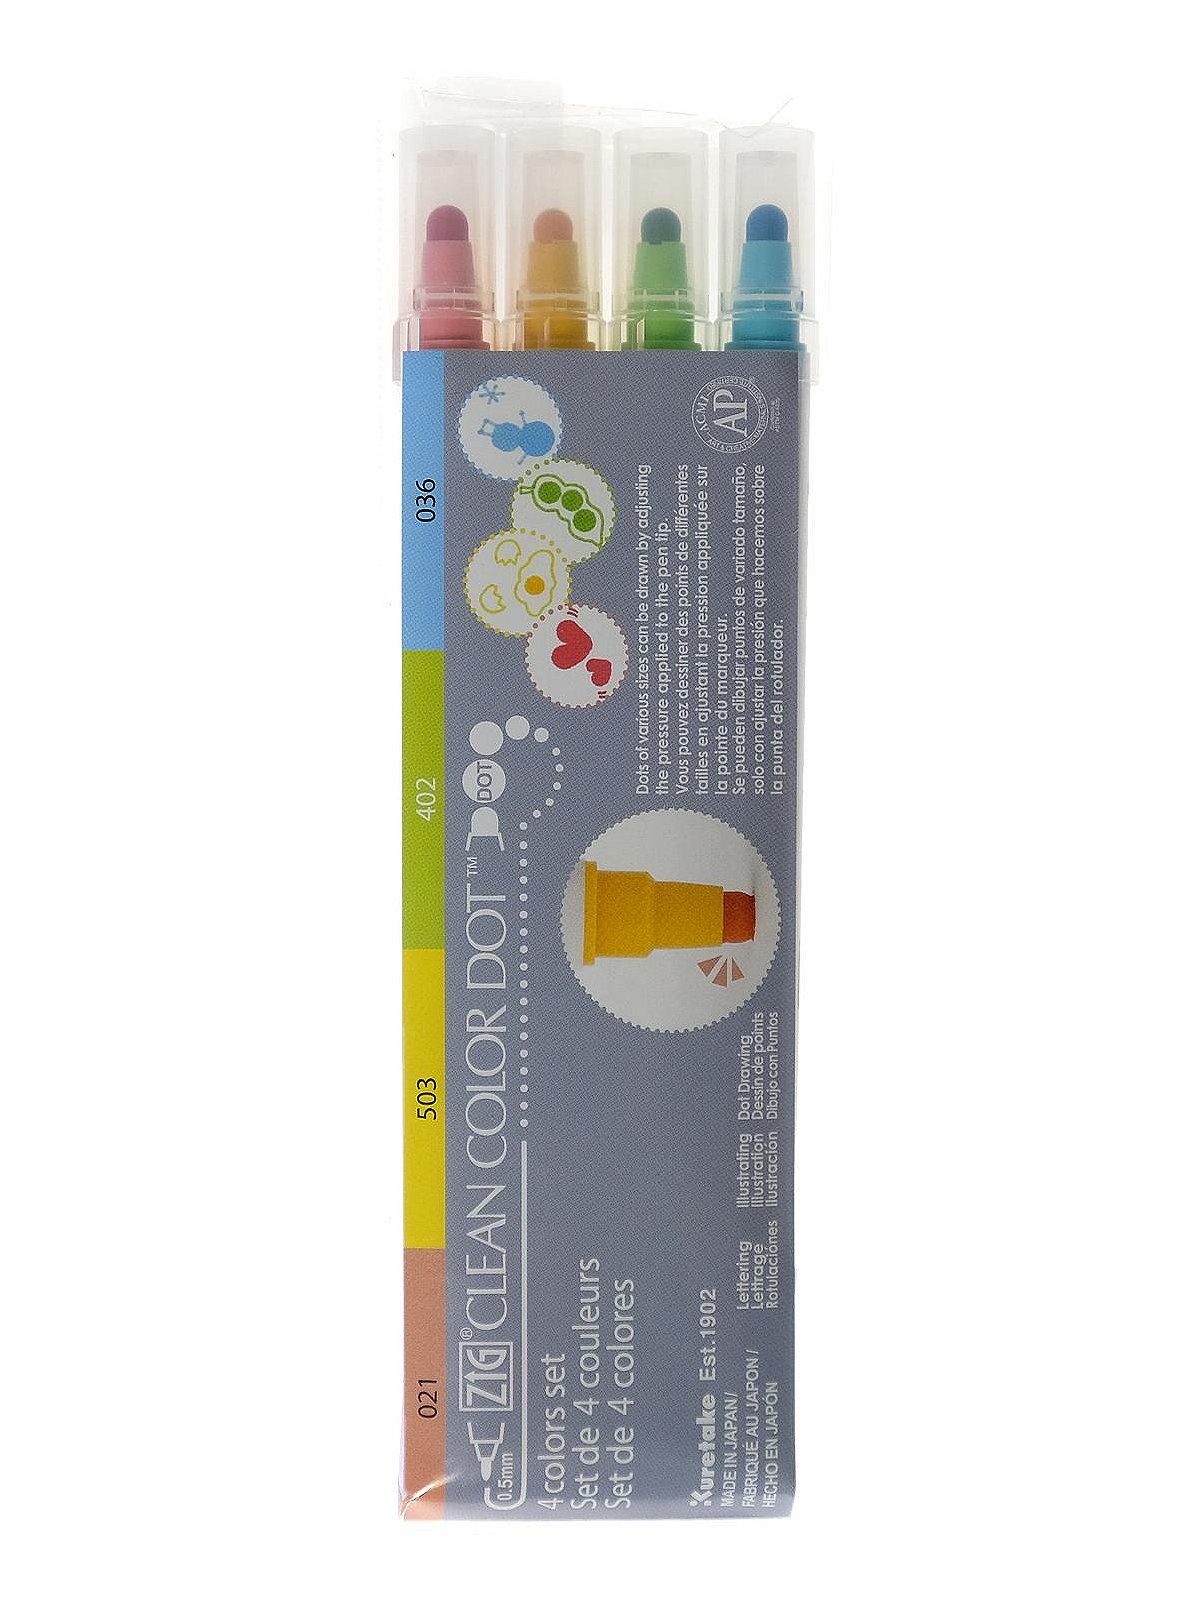 KURETAKE ZIG Clean Color Dot 6 Color Set